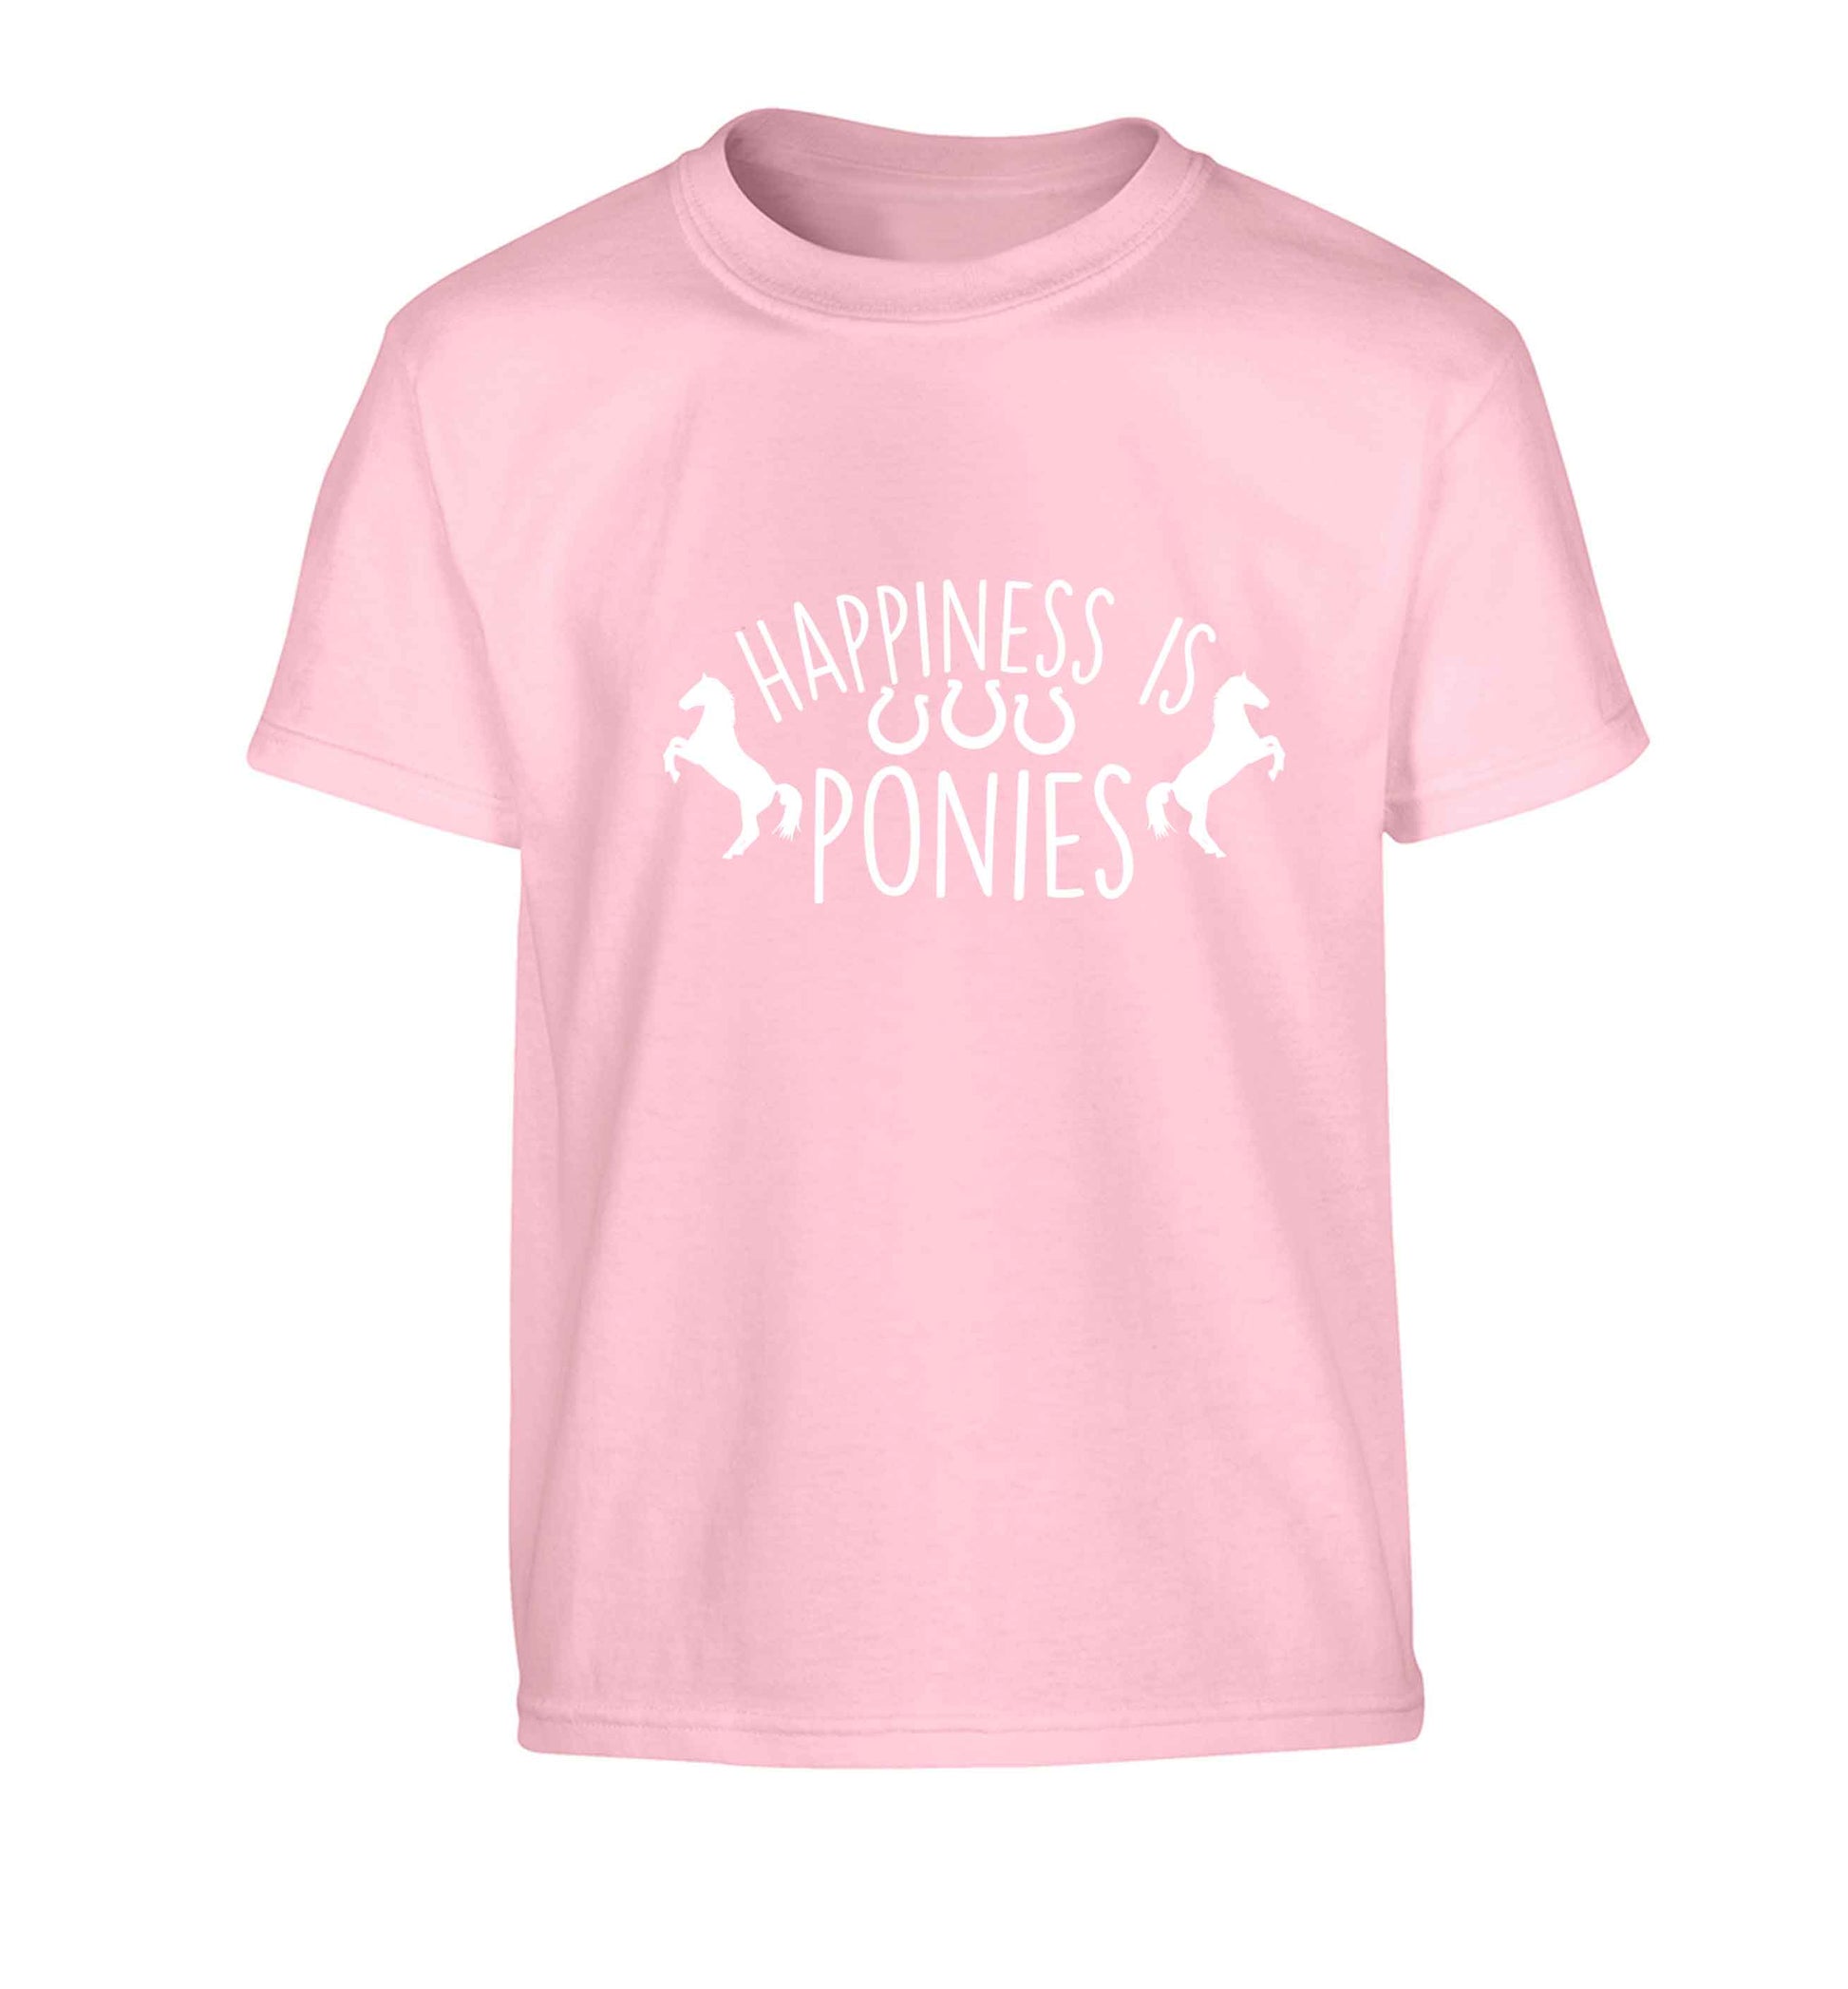 Happiness is ponies Children's light pink Tshirt 12-13 Years